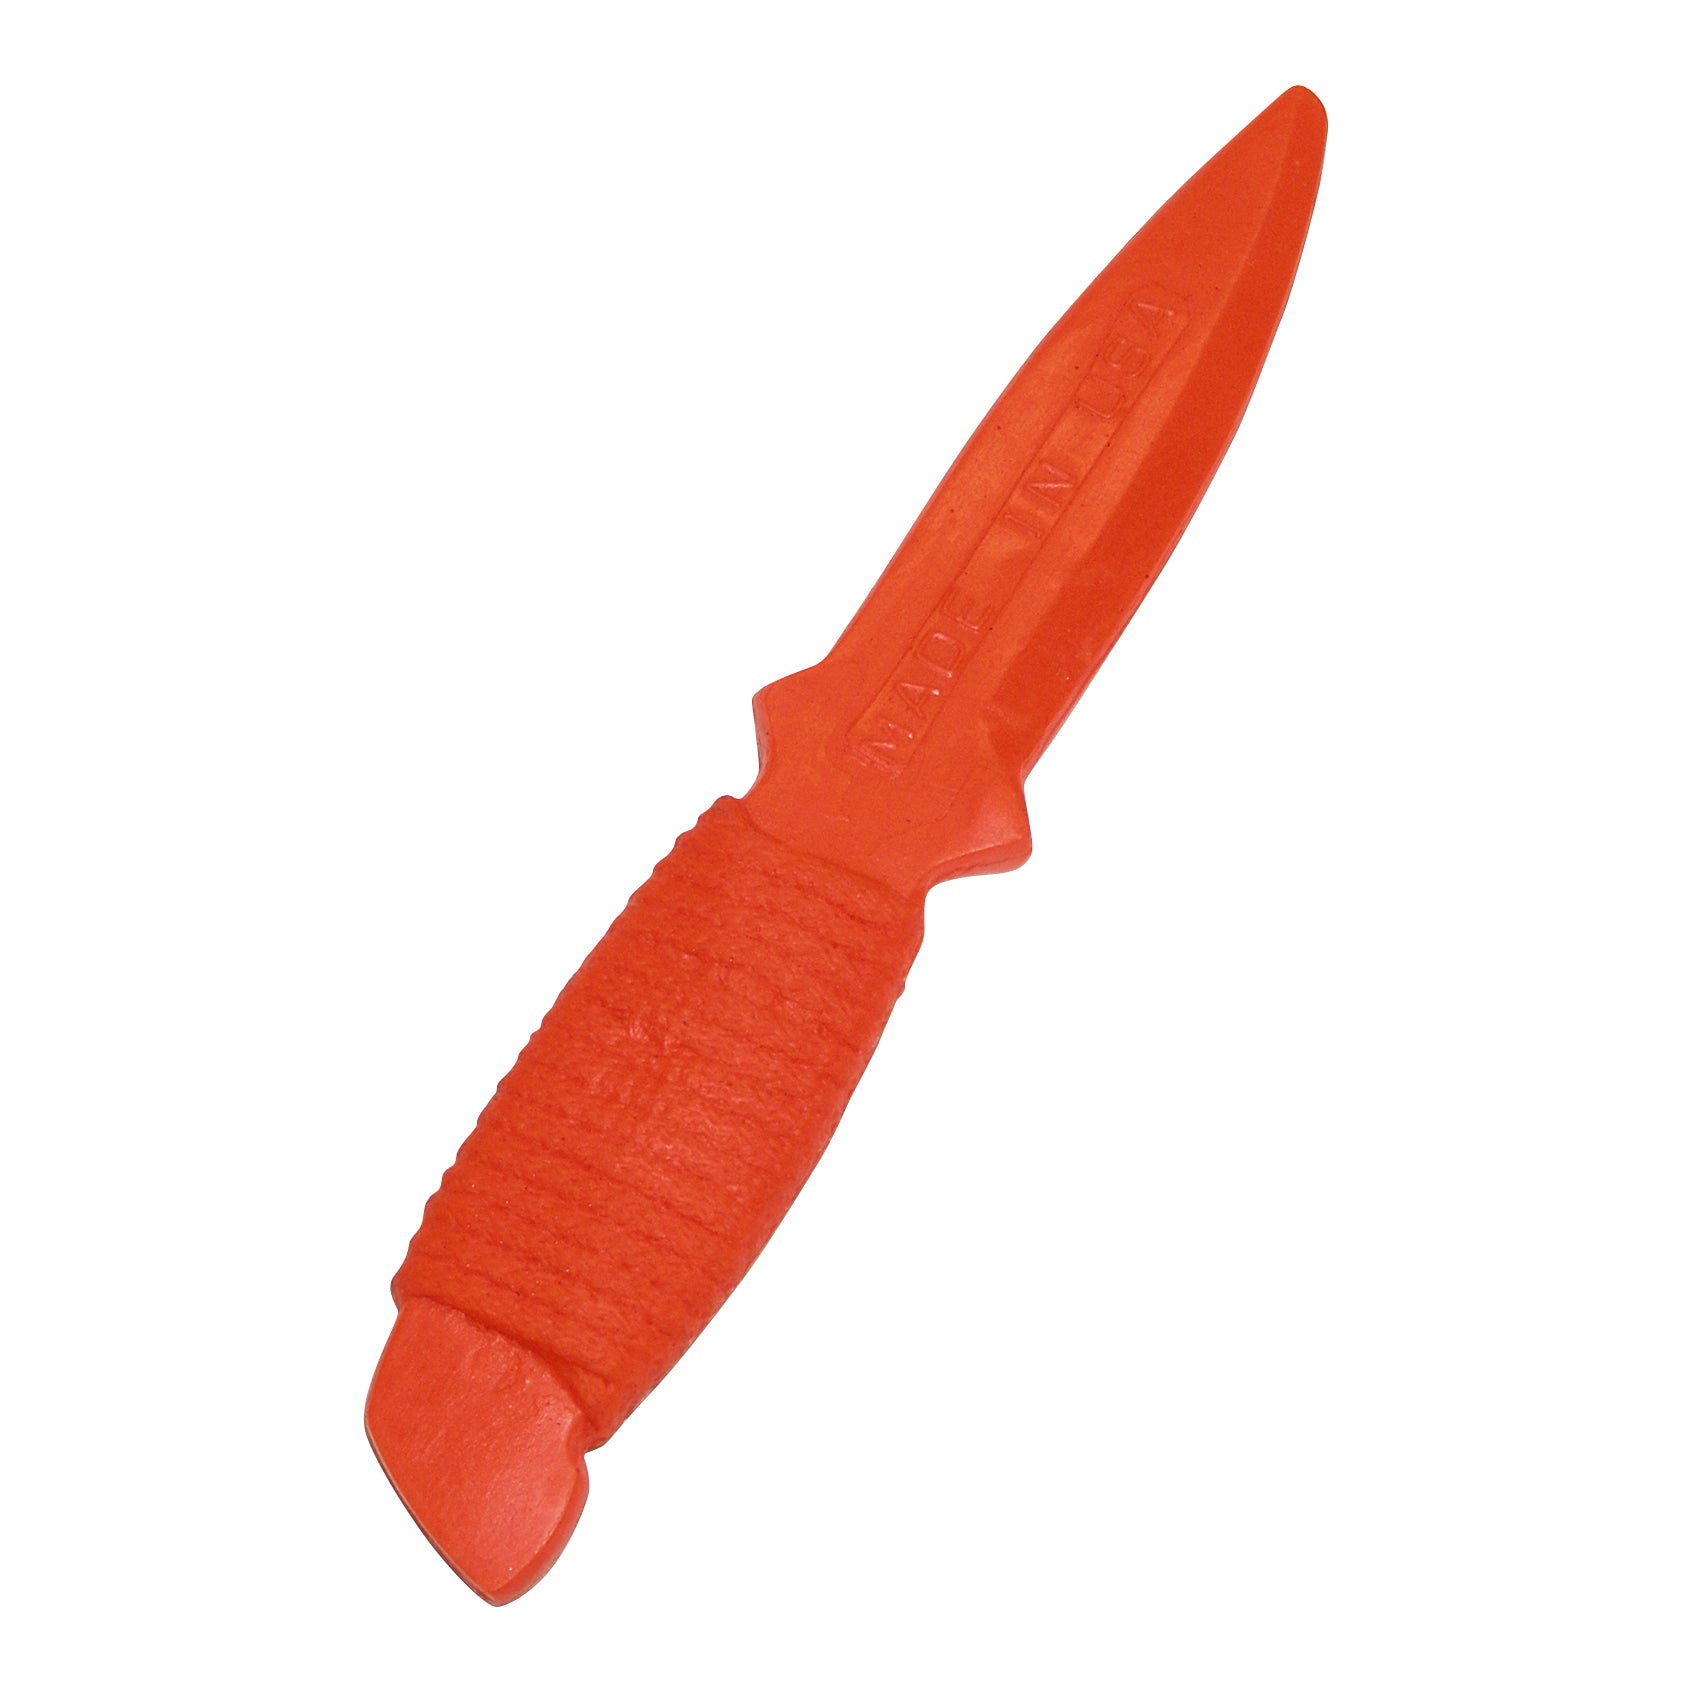 USA Safety Orange Rubber Practice Training Dagger Knife